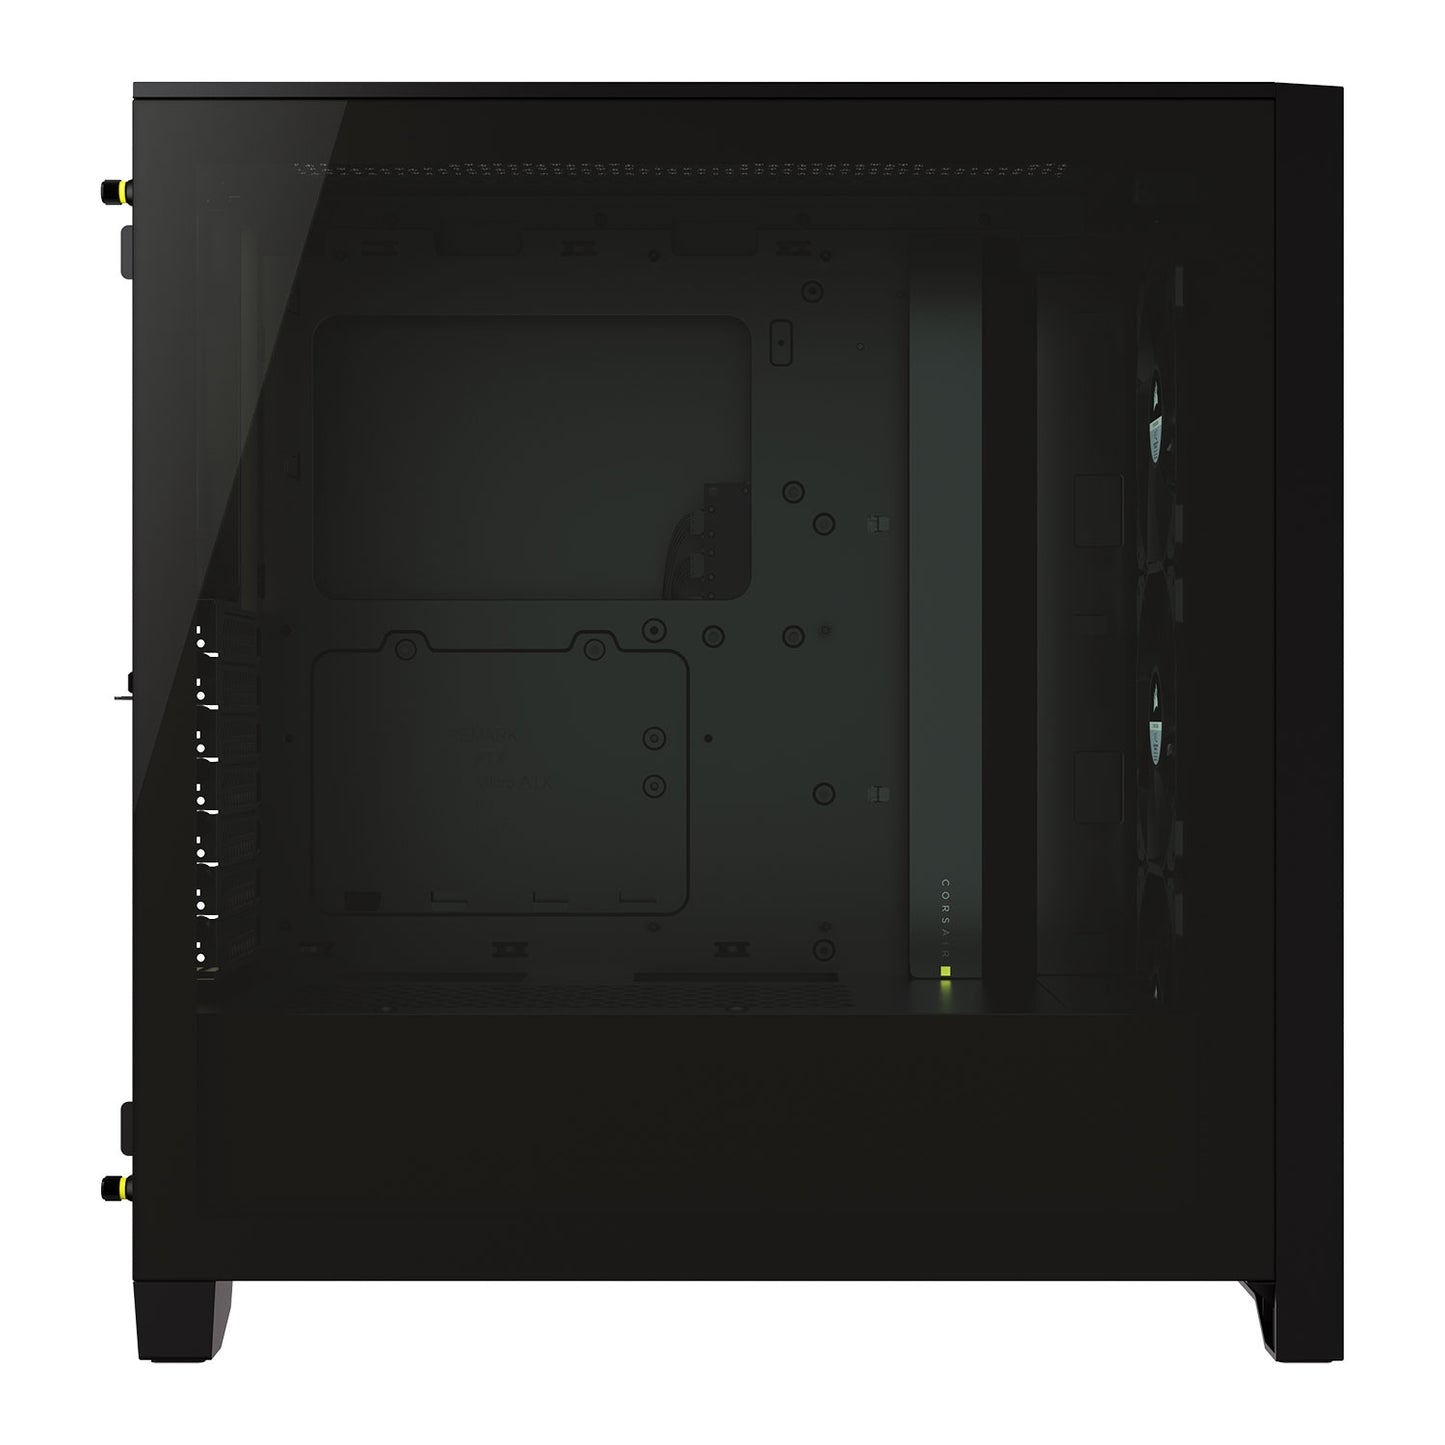 Corsair Black iCue 4000X RGB Mid Tower Tempered Glass Window PC Case mITX/mATX/ATX/E-ATX 3 fans CC-9011204-WW